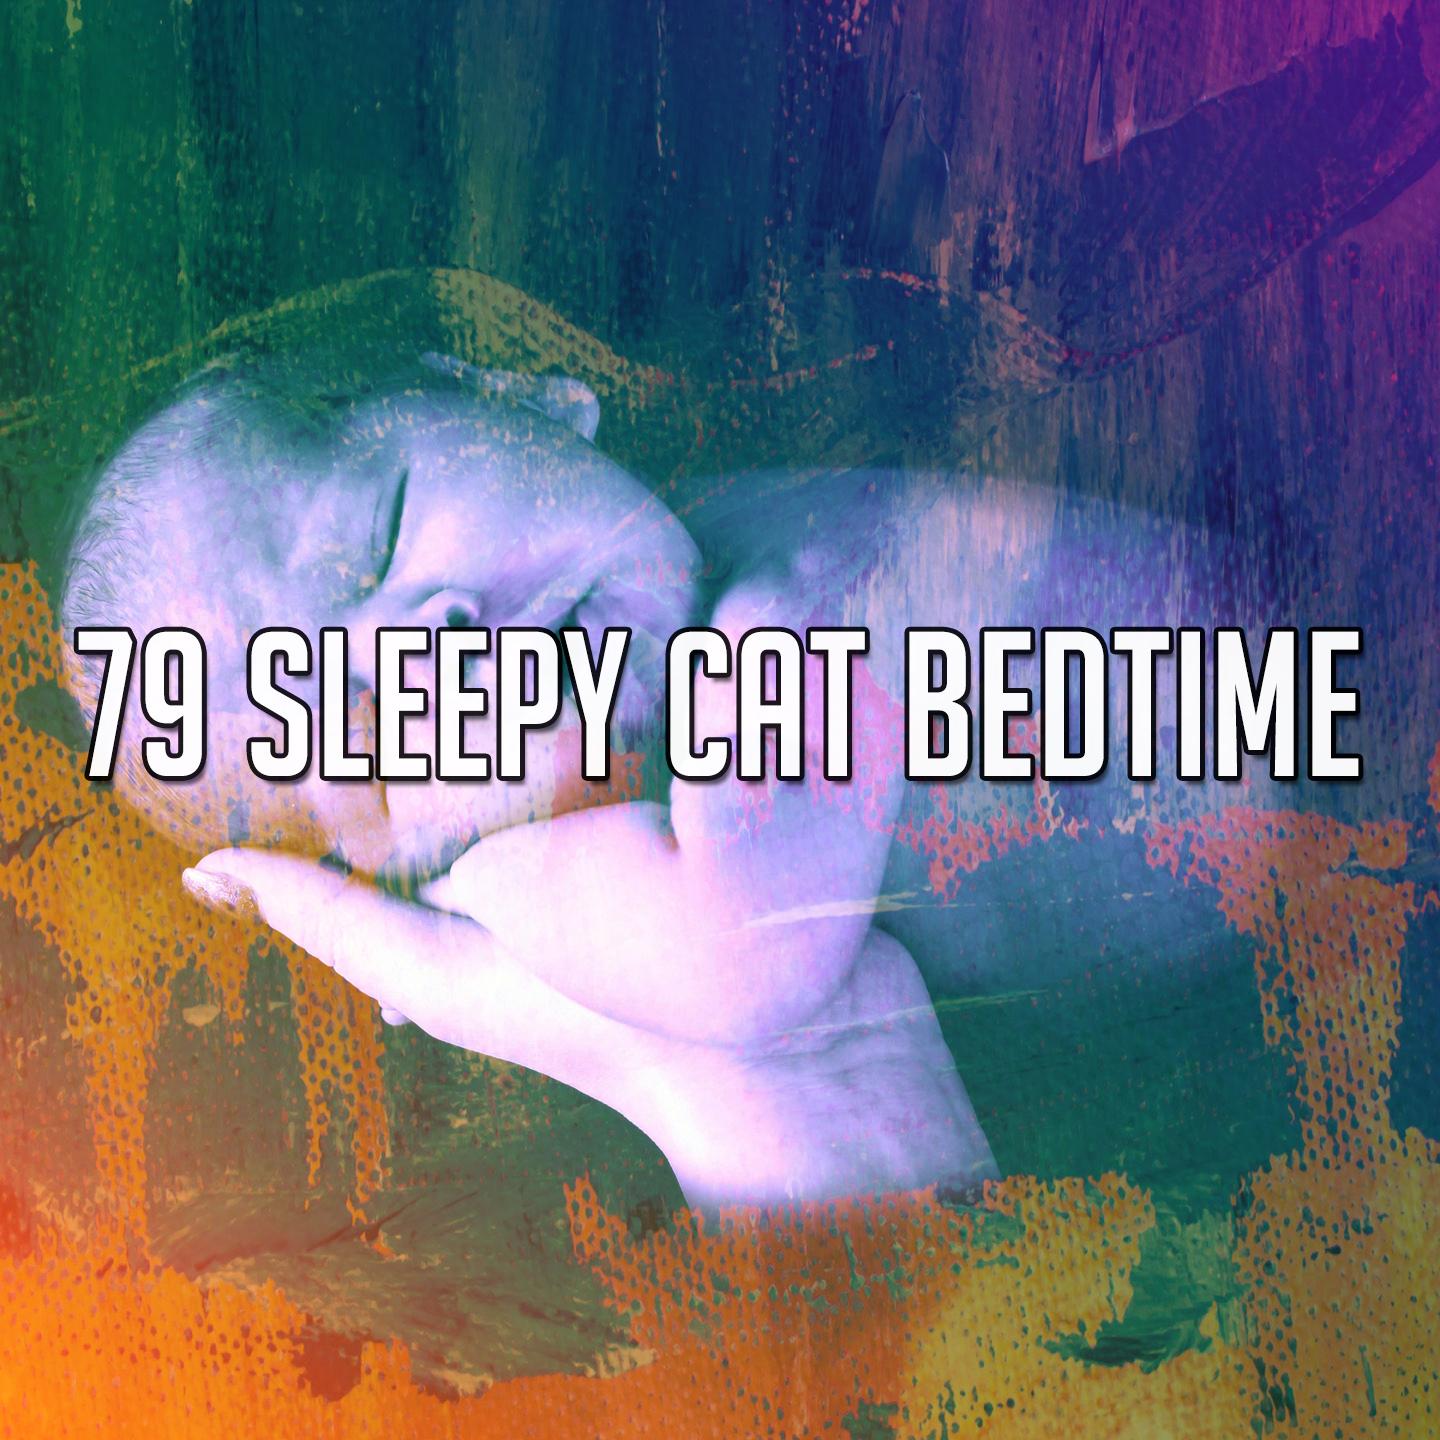 79 Sleepy Cat Bedtime